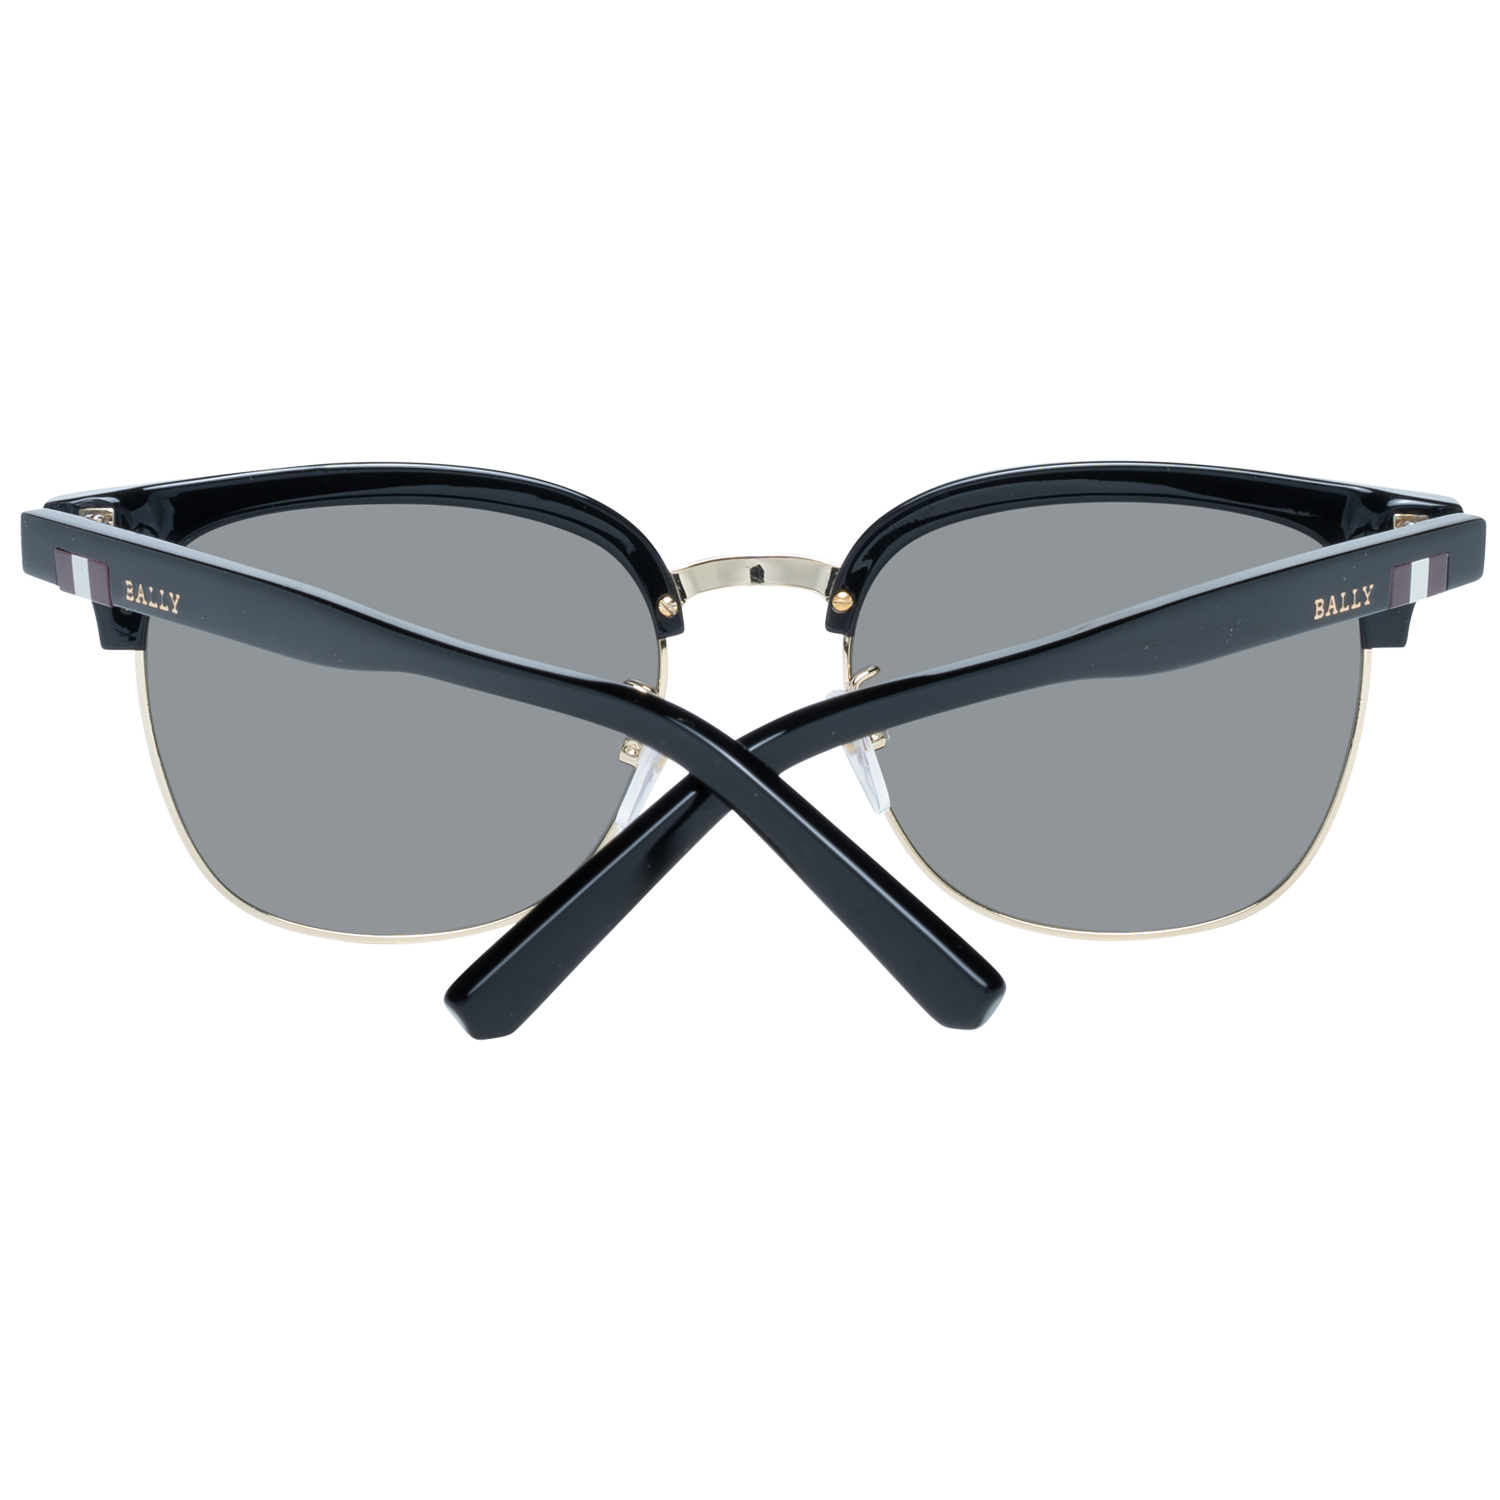 Bally Sunglasses Bally Sunglasses BY0049-K 01D 56 Eyeglasses Eyewear UK USA Australia 